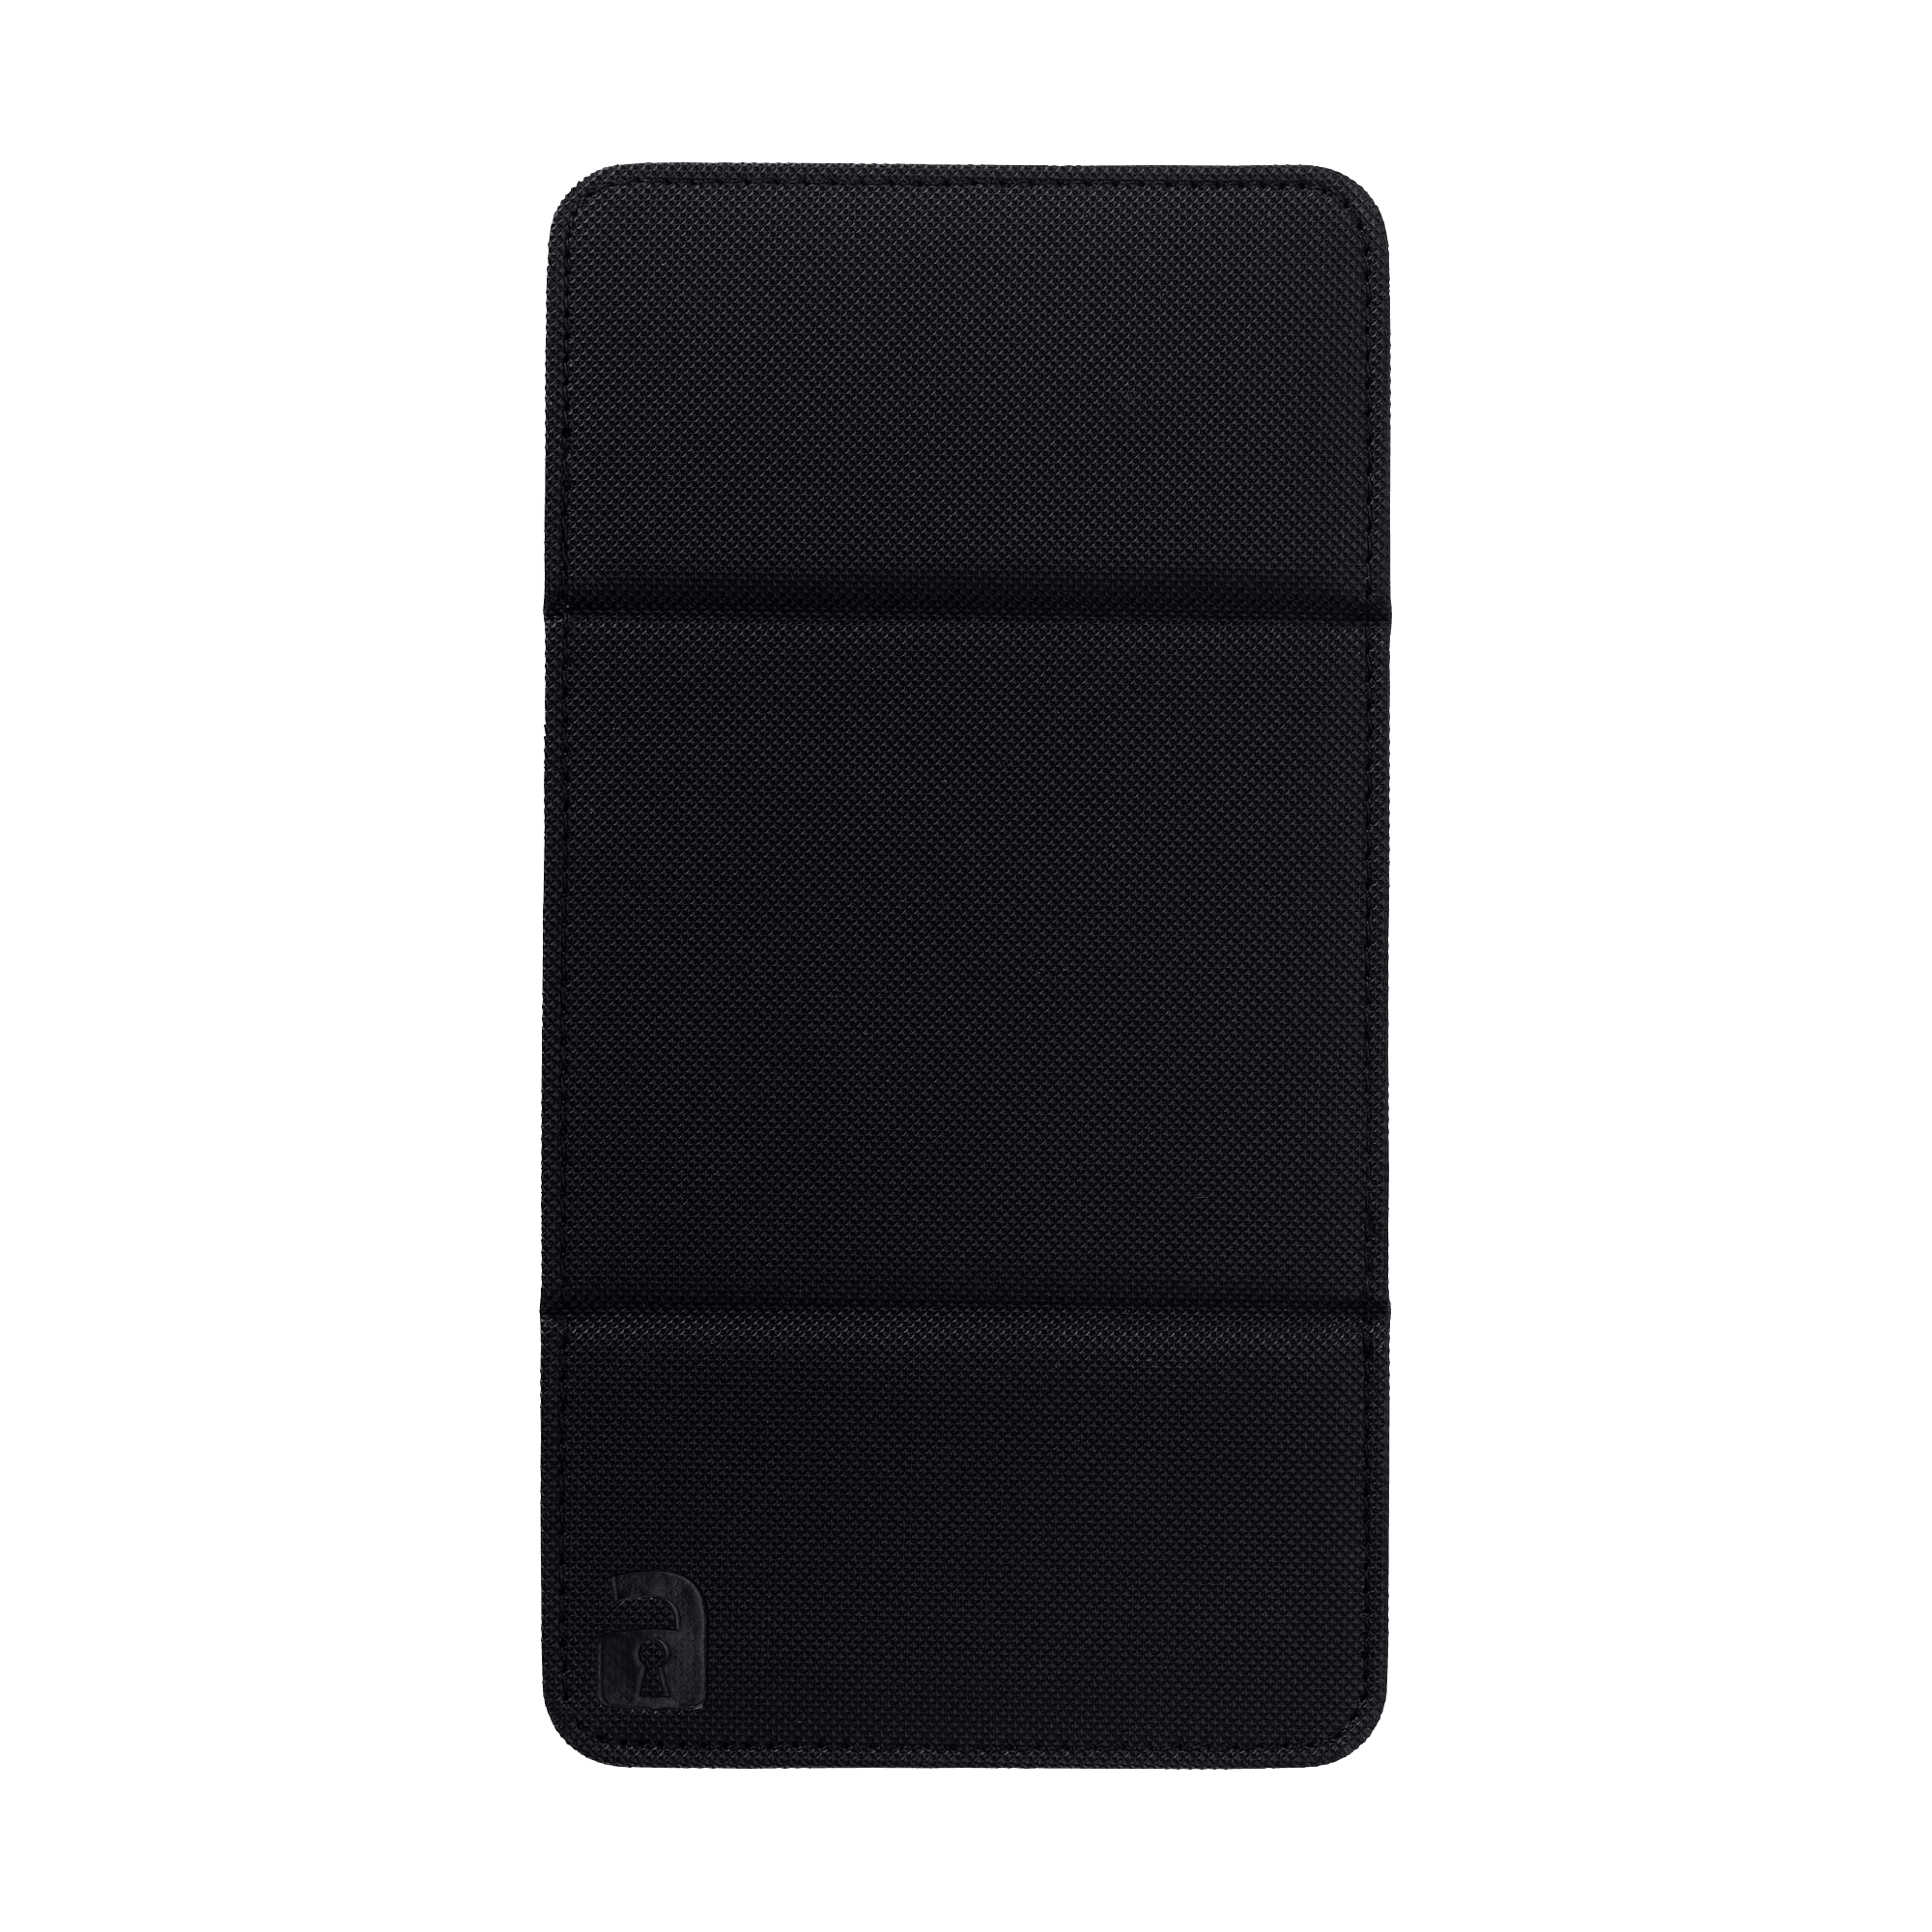 Vault X - Exo-Tec® Sideloading Deck Box 100+ - Black - The Card Vault